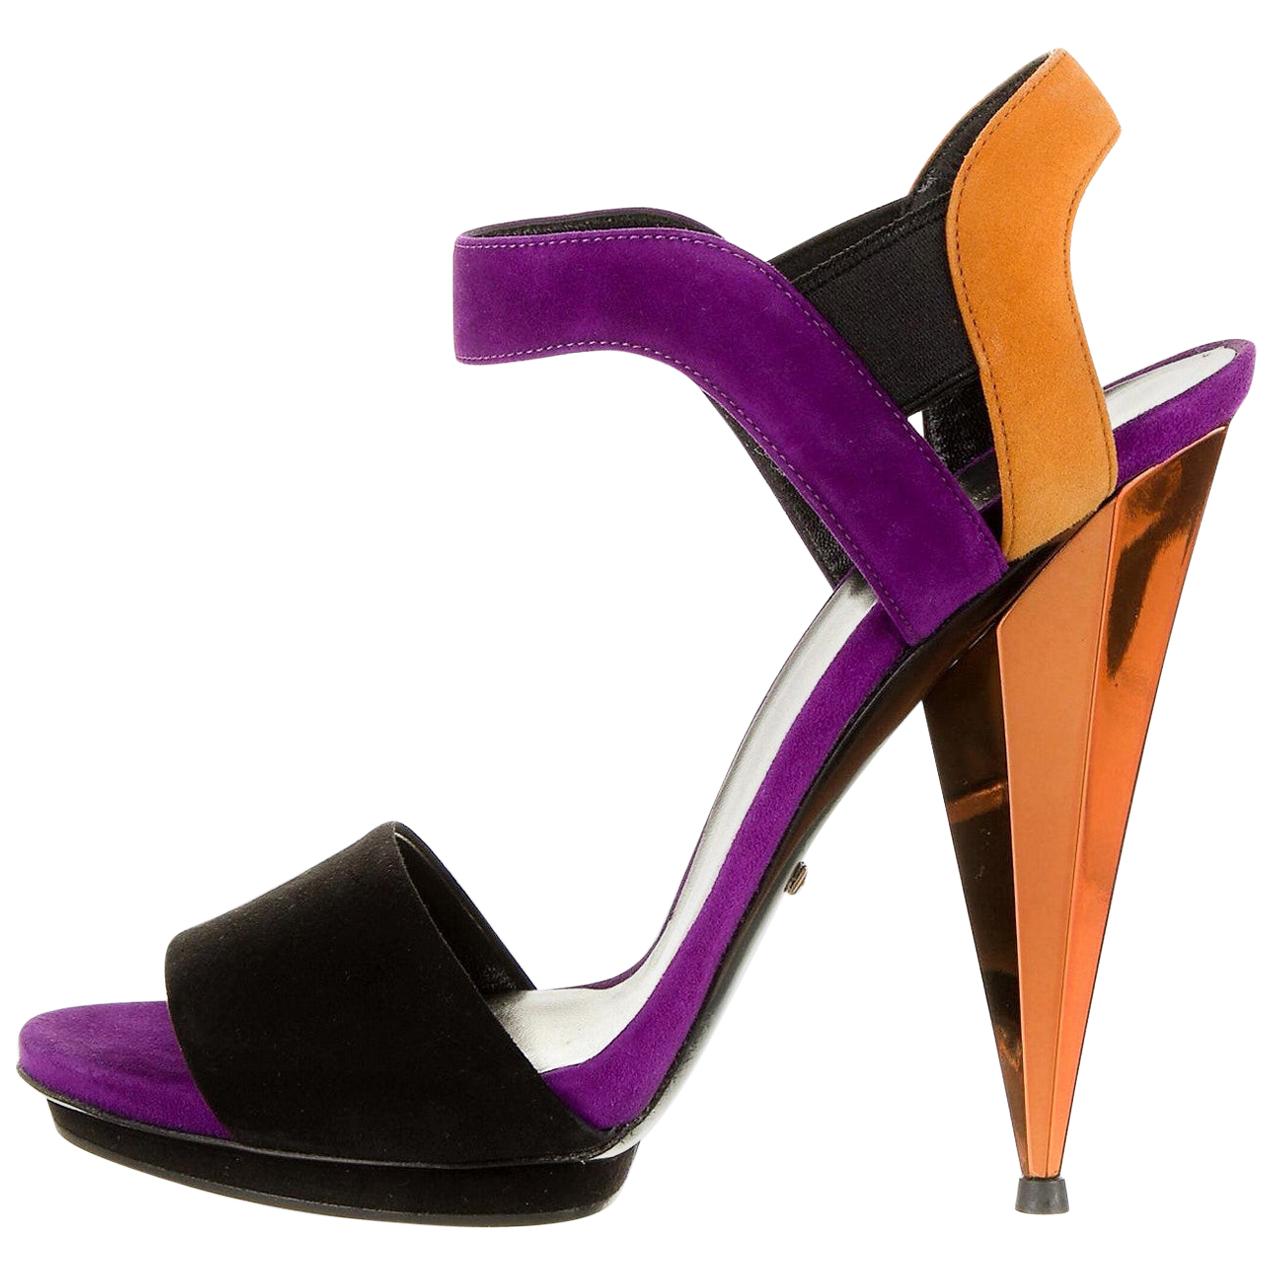 New Gucci Ad Runway 2014 Purple Orange Suede Mirrored Pump Heels Sz 39.5 For Sale